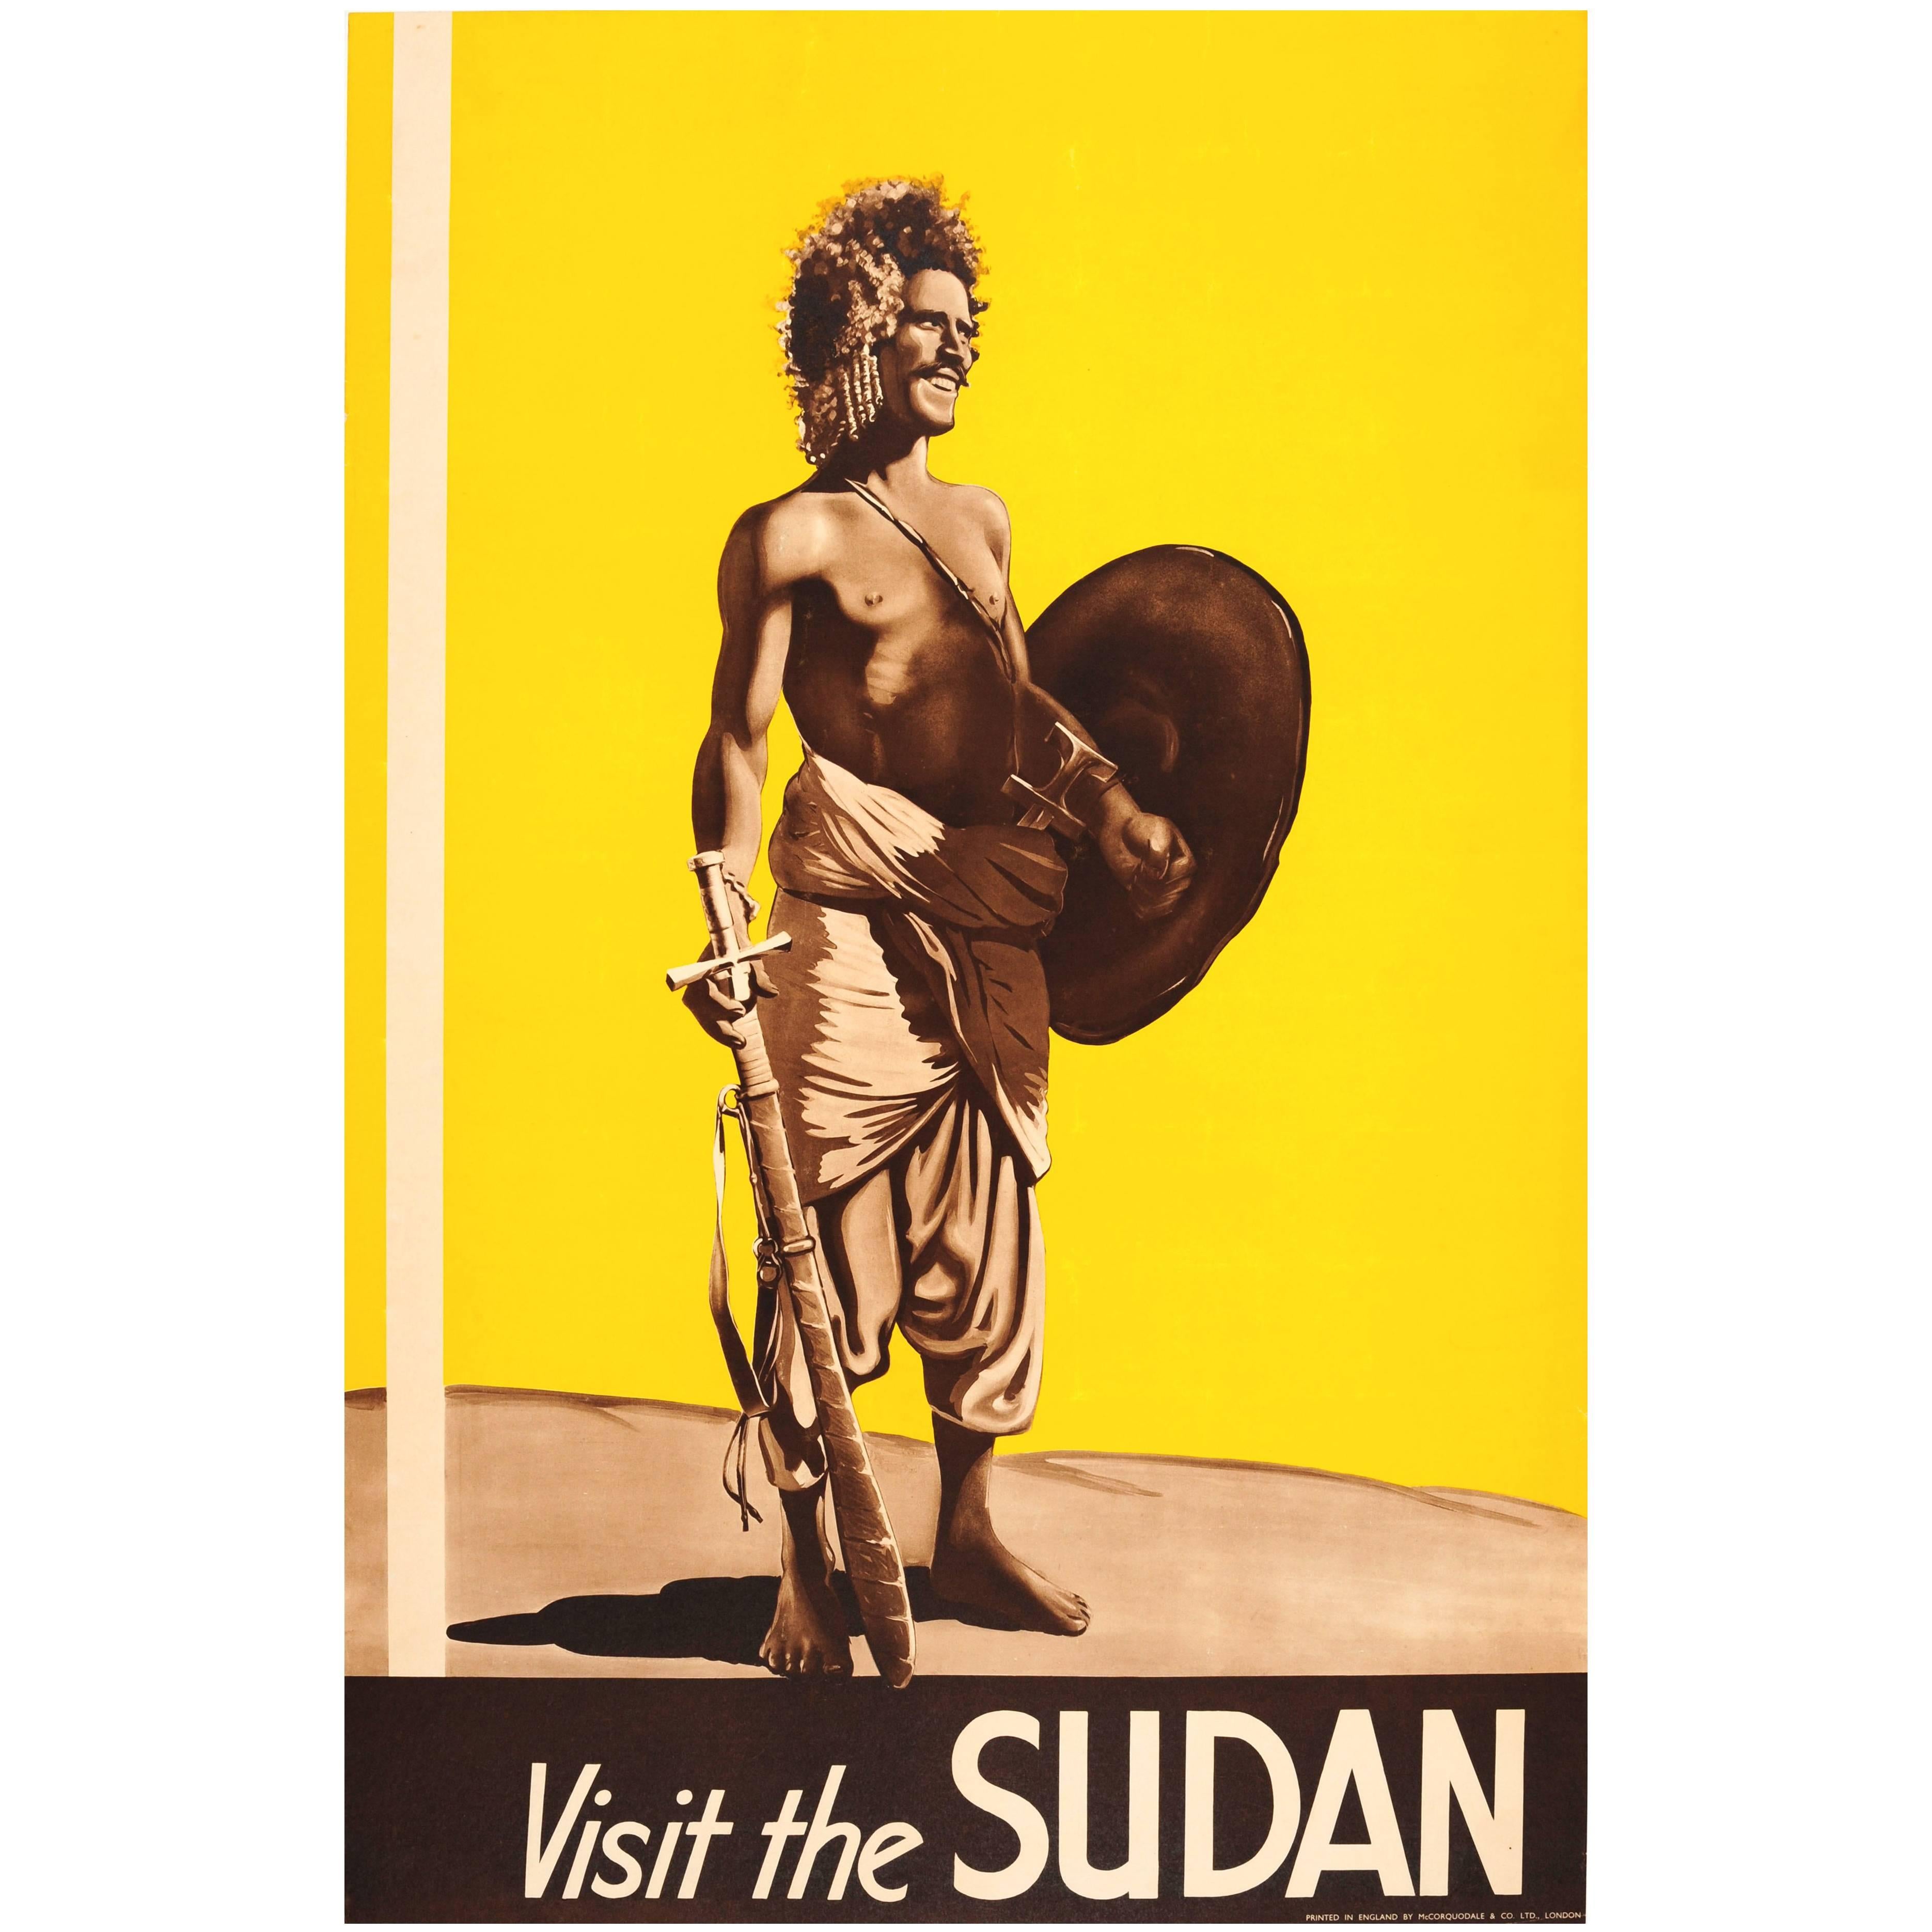 Original Vintage 1930s Travel Advertising Poster, Visit The Sudan, Africa